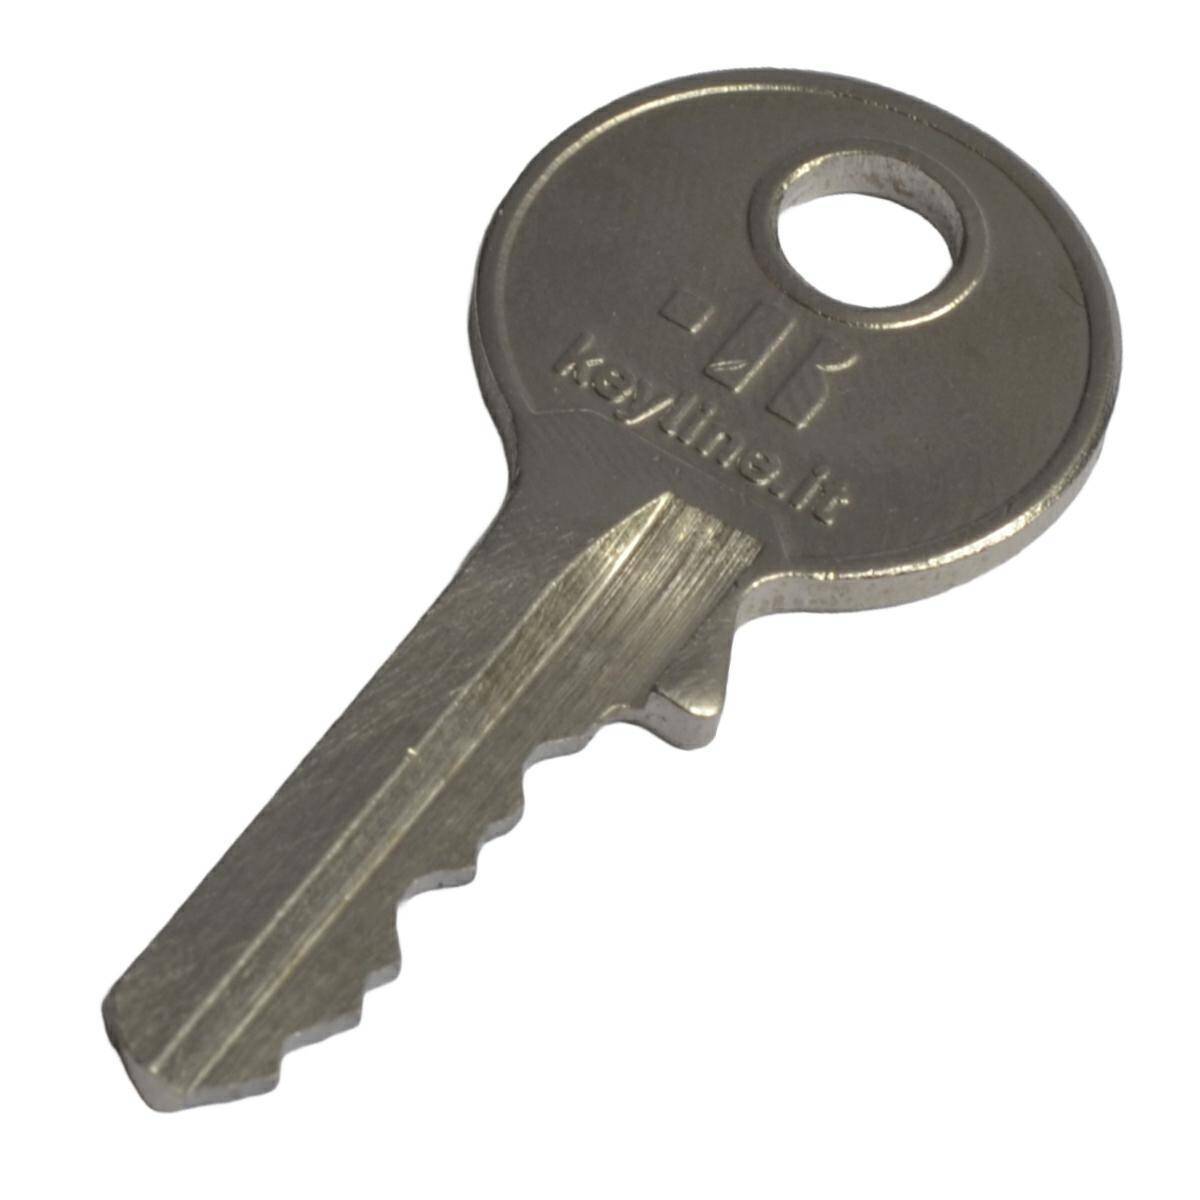 Key to unlock the drive - Faac